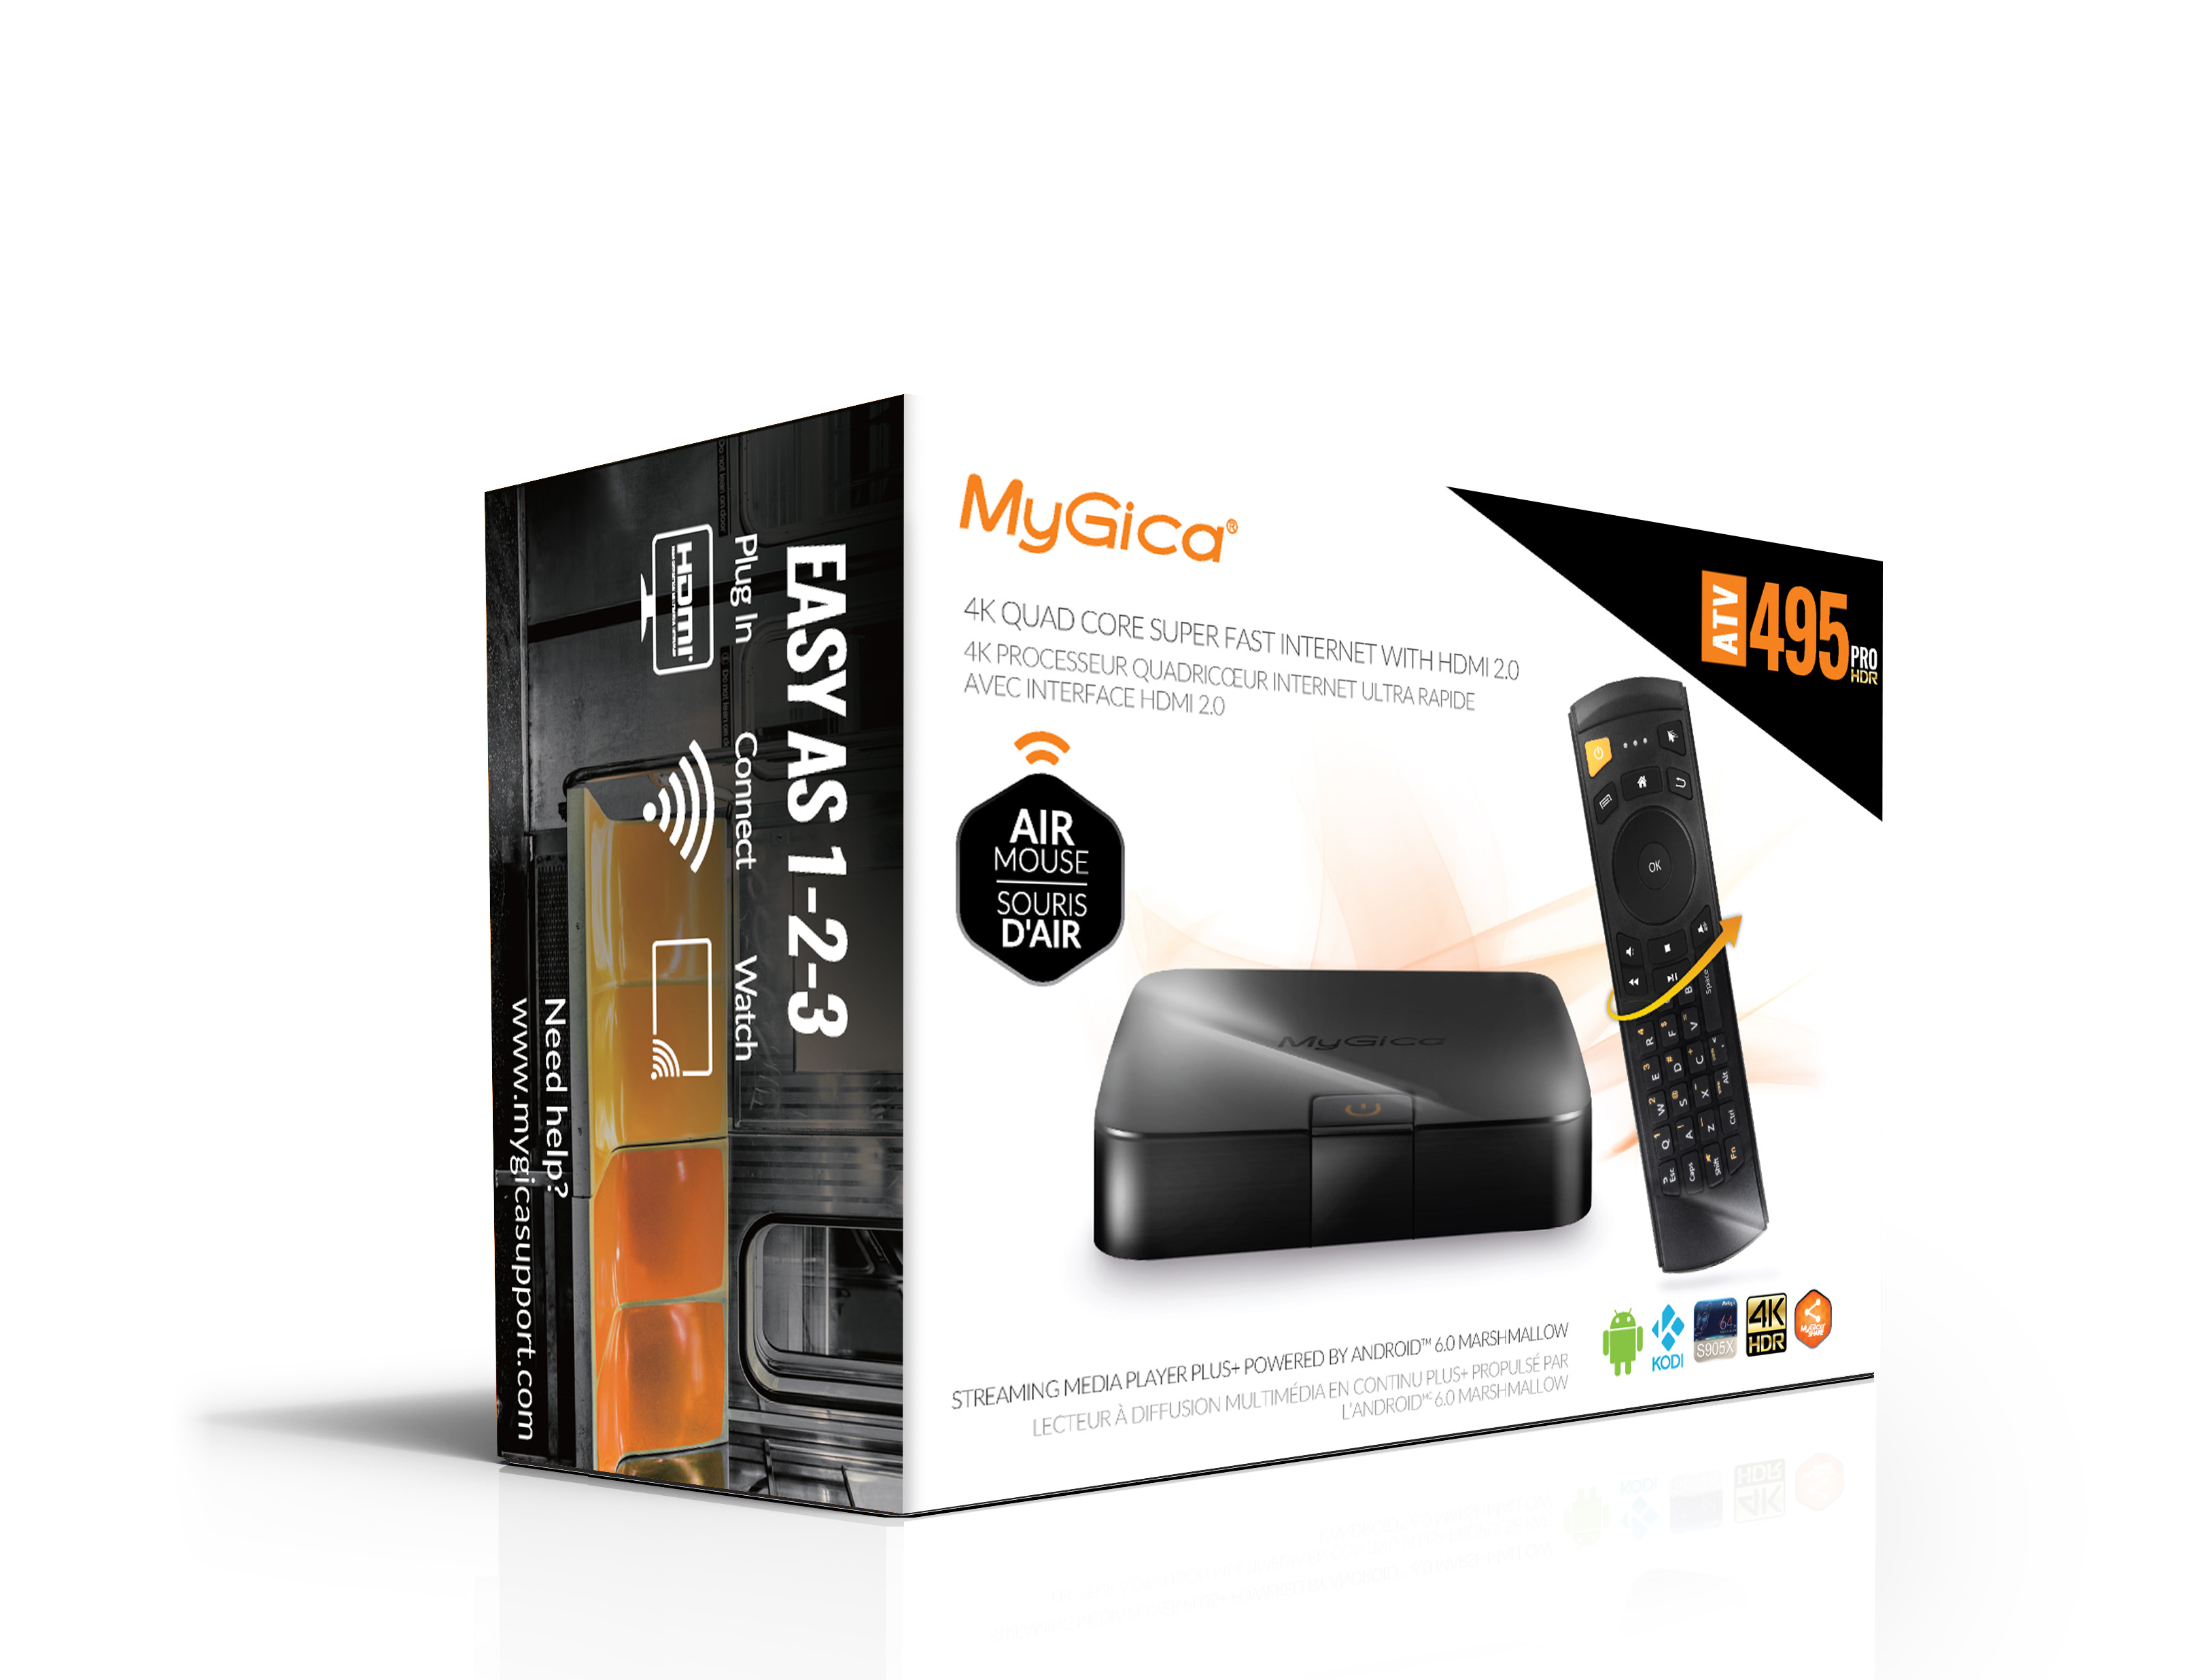 MyGica ATV495 PRO HDR Quad Android Ultra 4K HDMI 2.0 HDTV Box